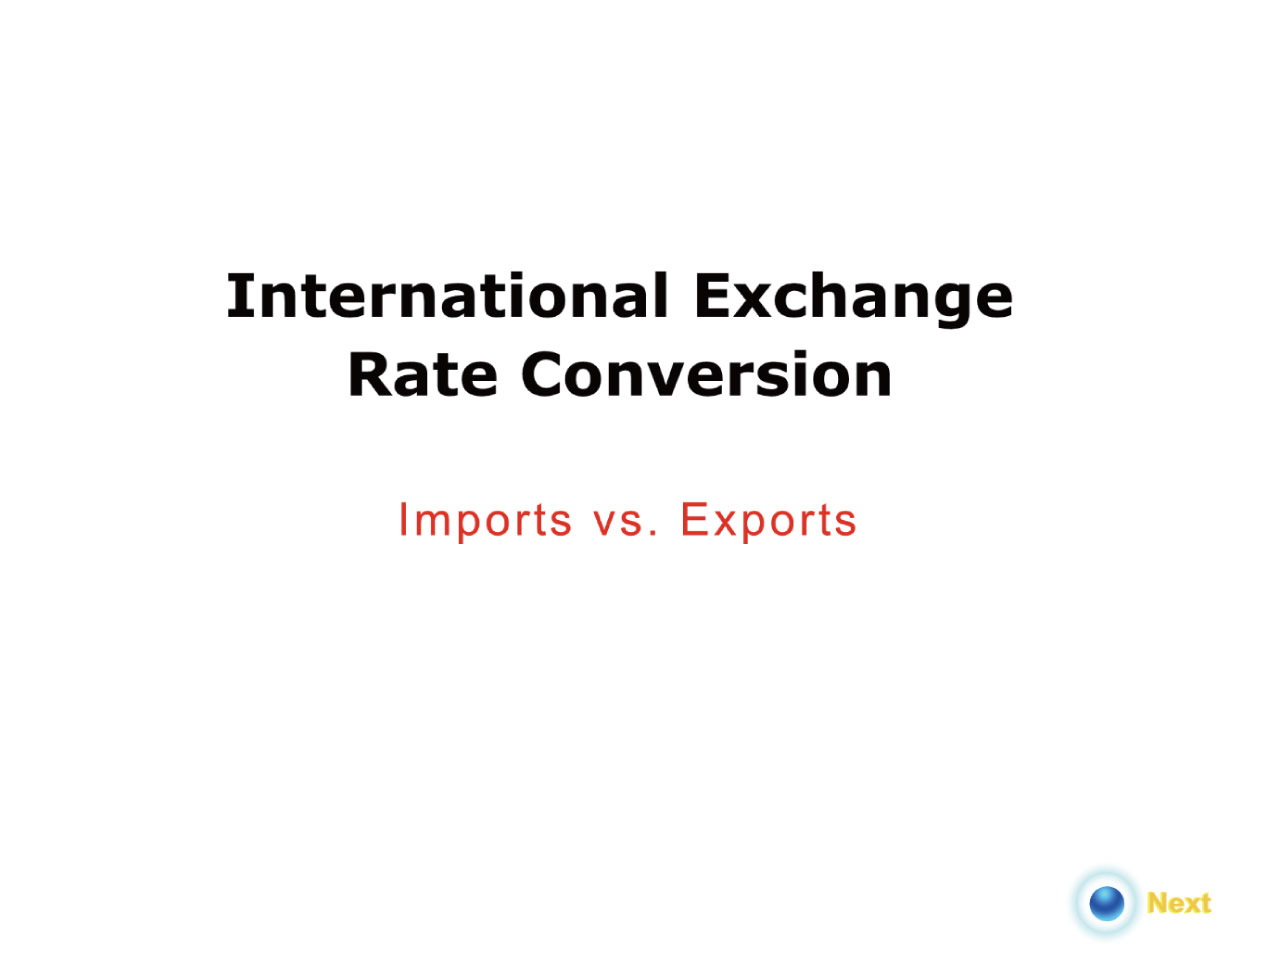 International Exchange Rates